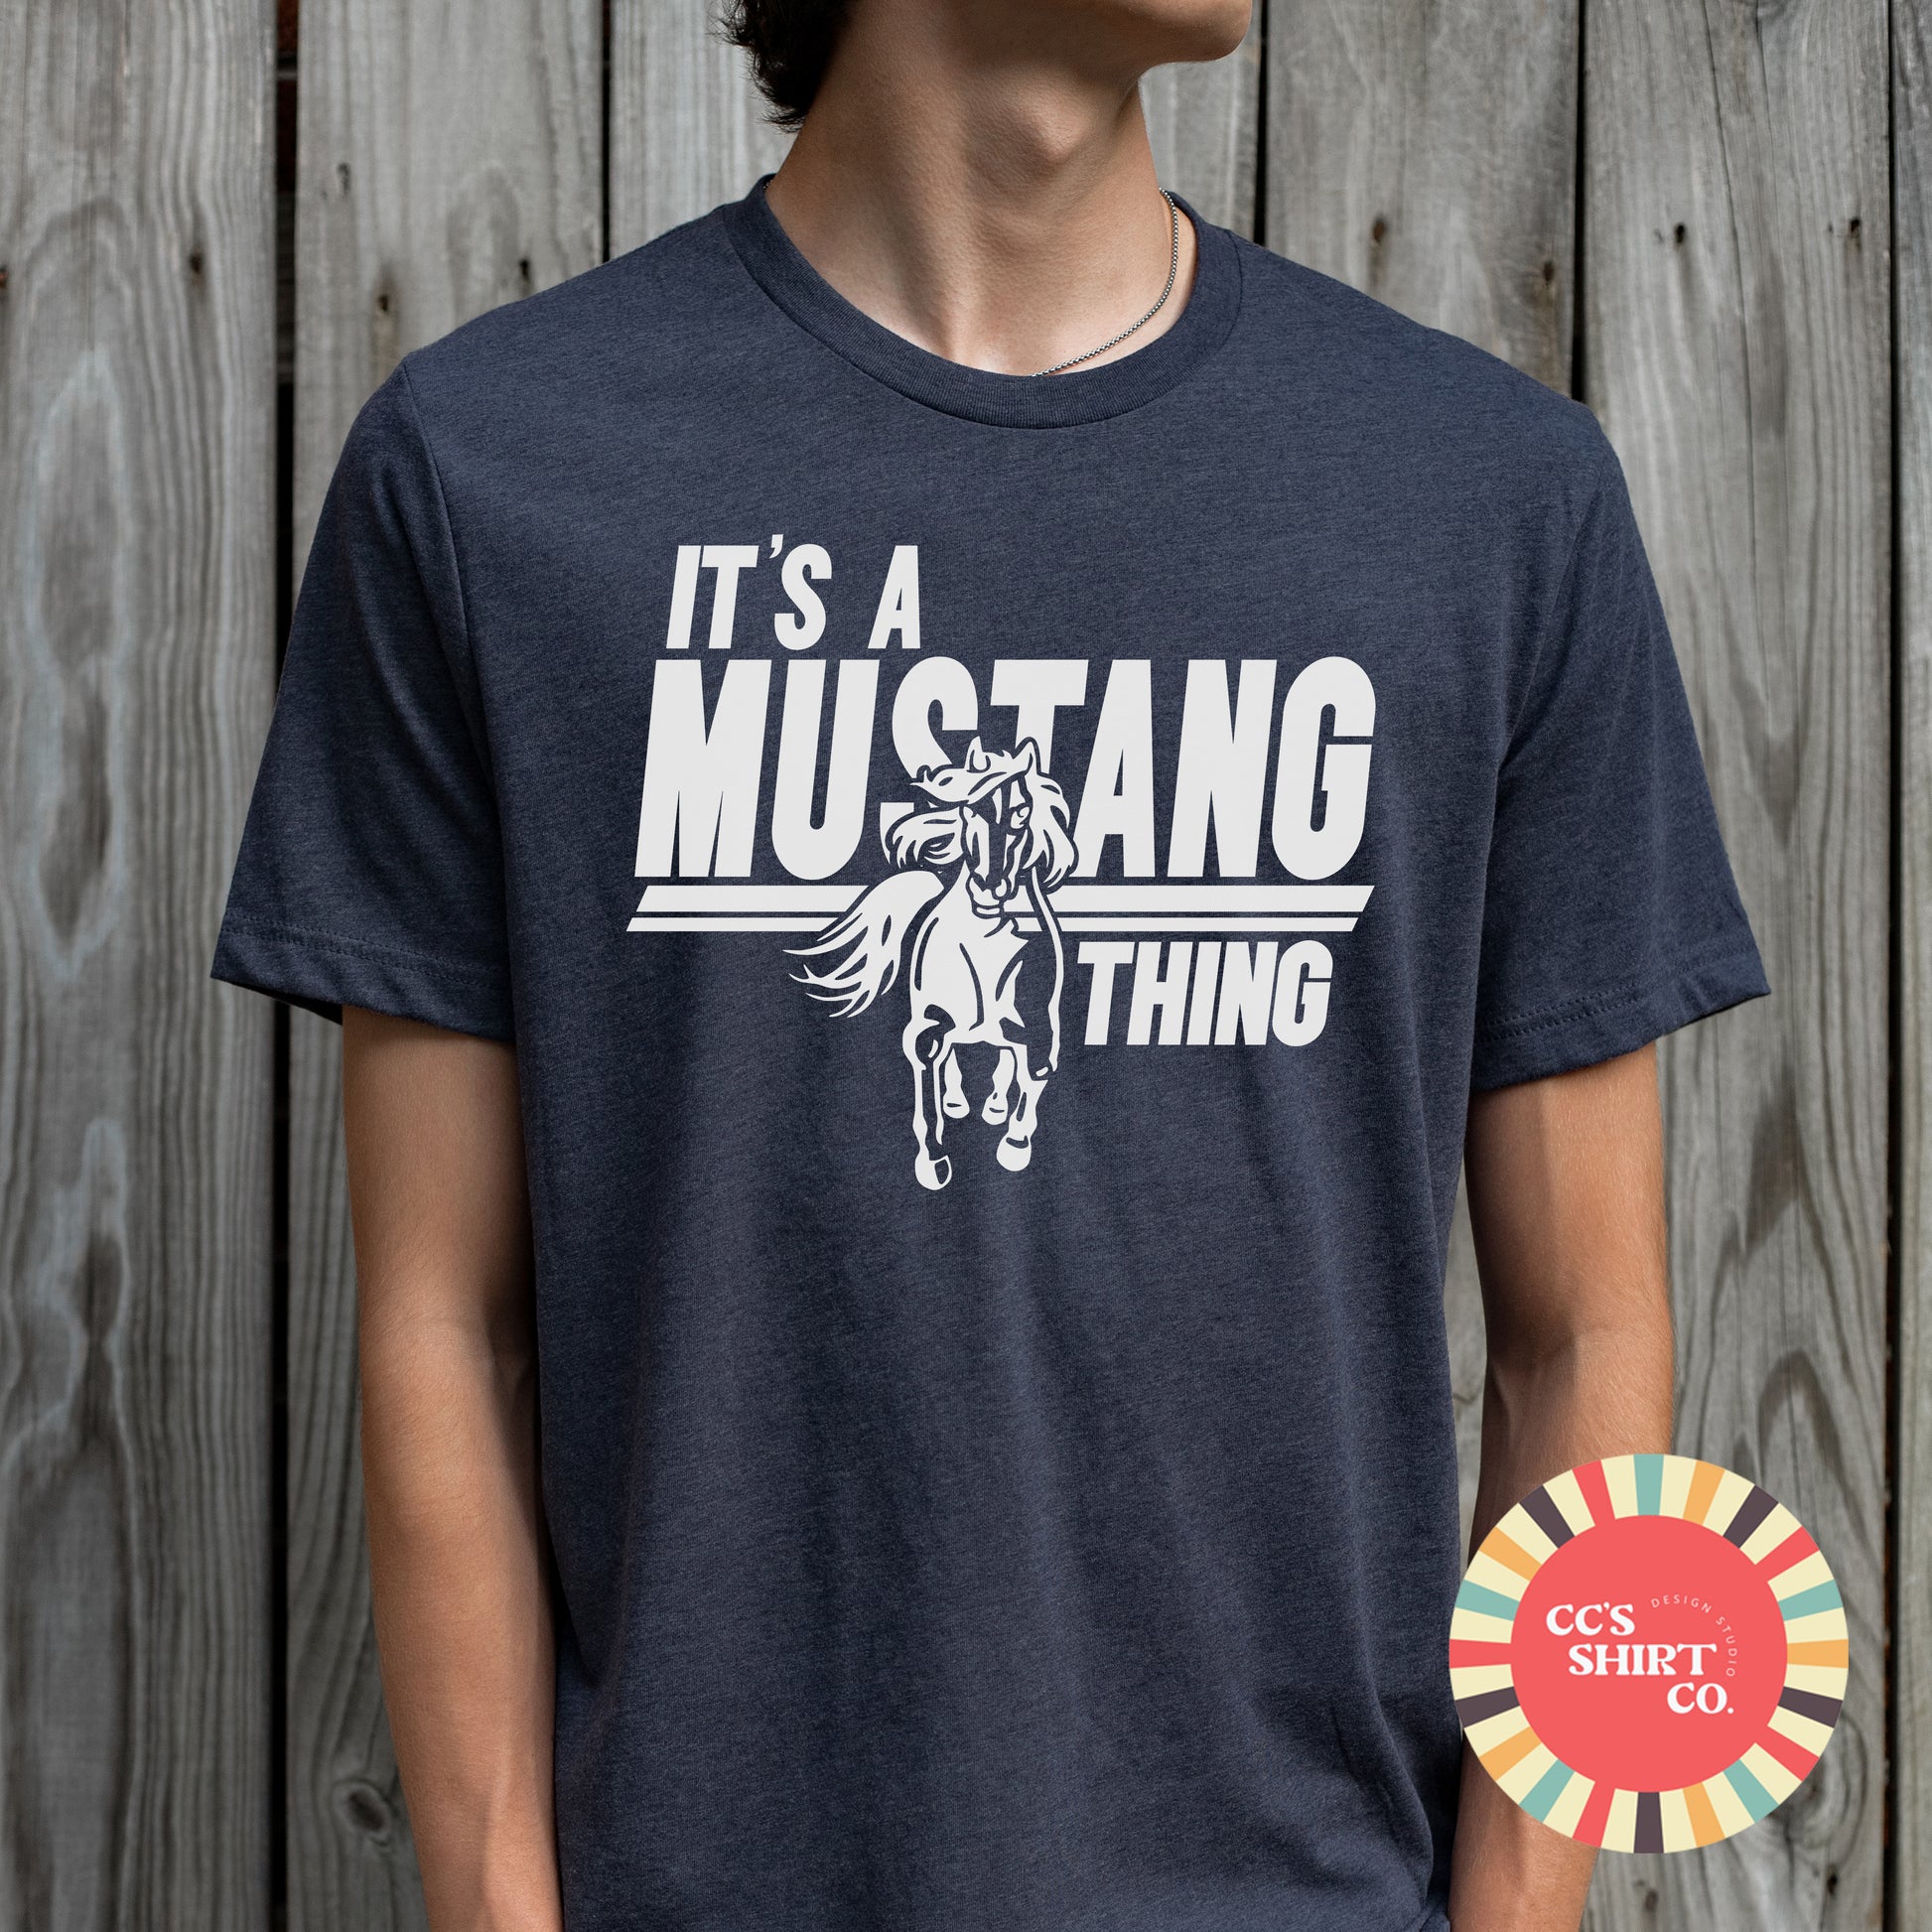 It\'s A Mustang Tee Thing – Spirit CC\'s Co Shirt